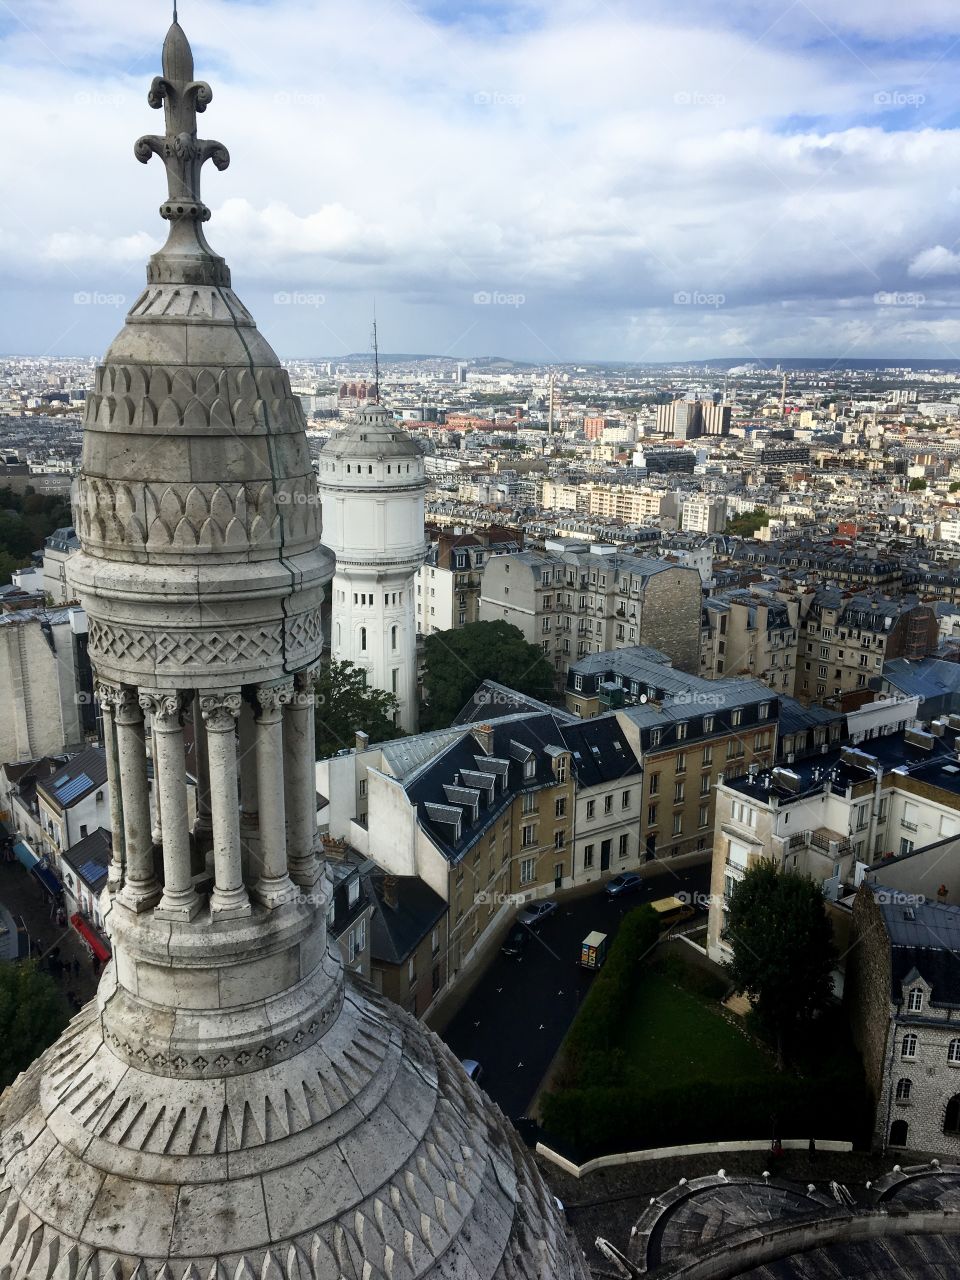 Paris, France as seen from Sacre Coeur Basilica 